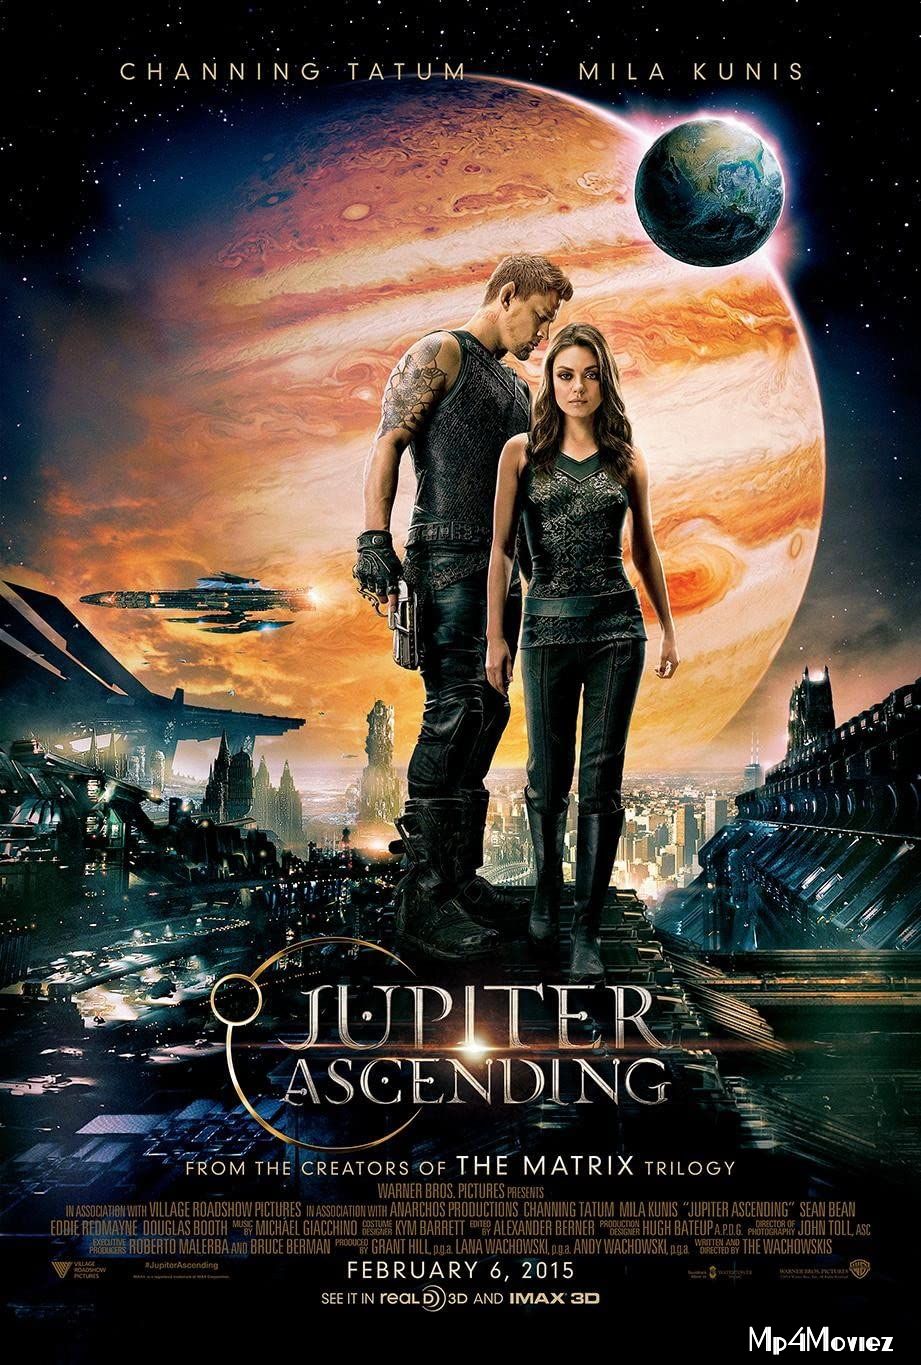 Jupiter Ascending (2015) Hindi Dubbed HDRip download full movie